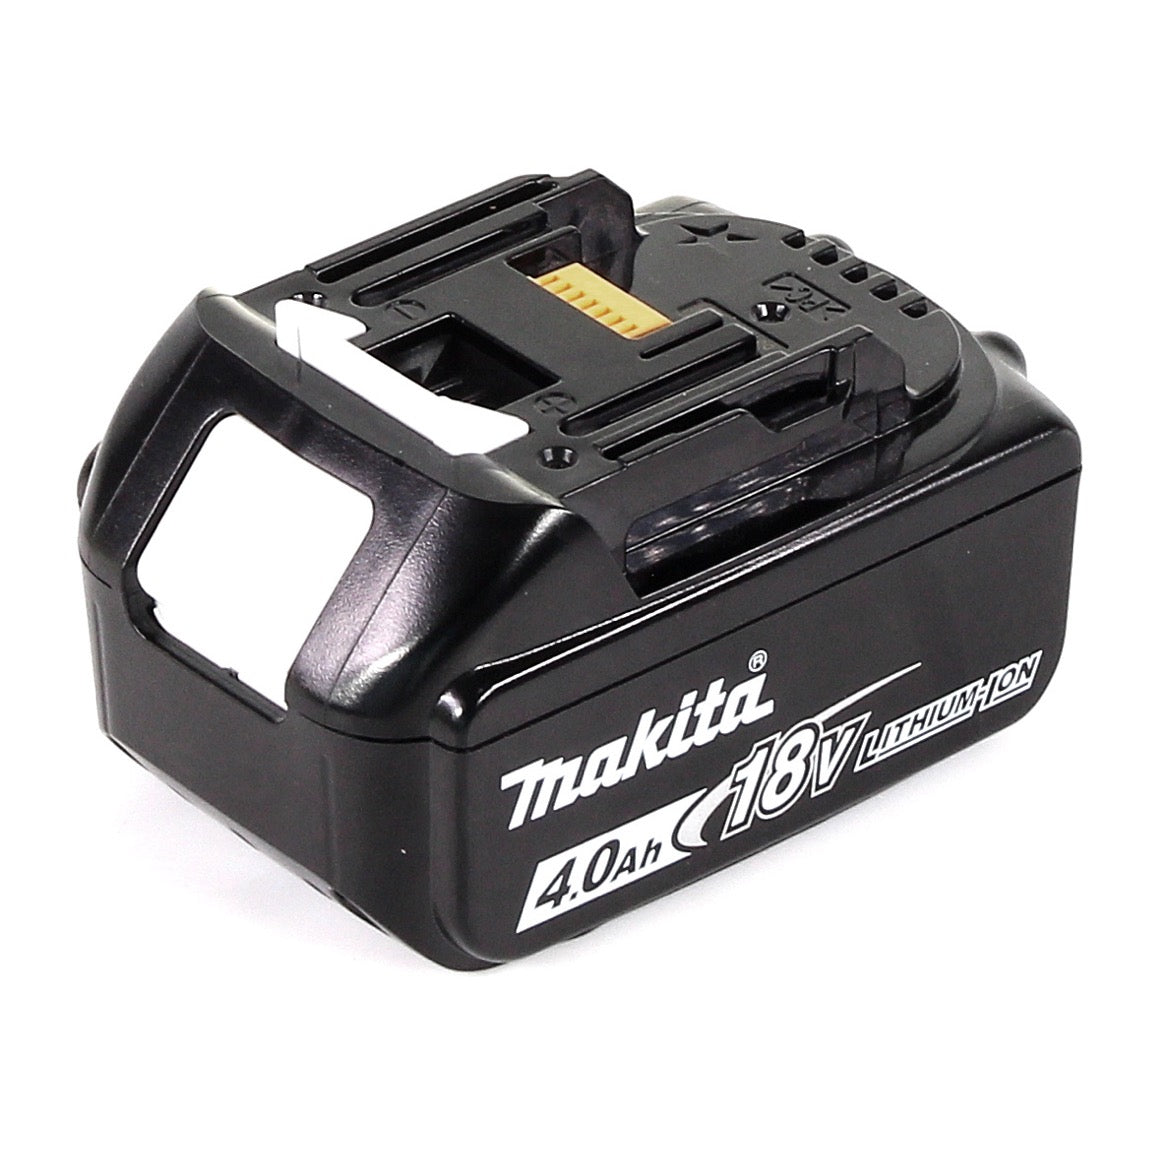 Makita DCS 553 M1J Akku Metallhandkreissäge 18 V 150 mm Brushless + 1x Akku 4,0Ah + Makpac - ohne Ladegerät